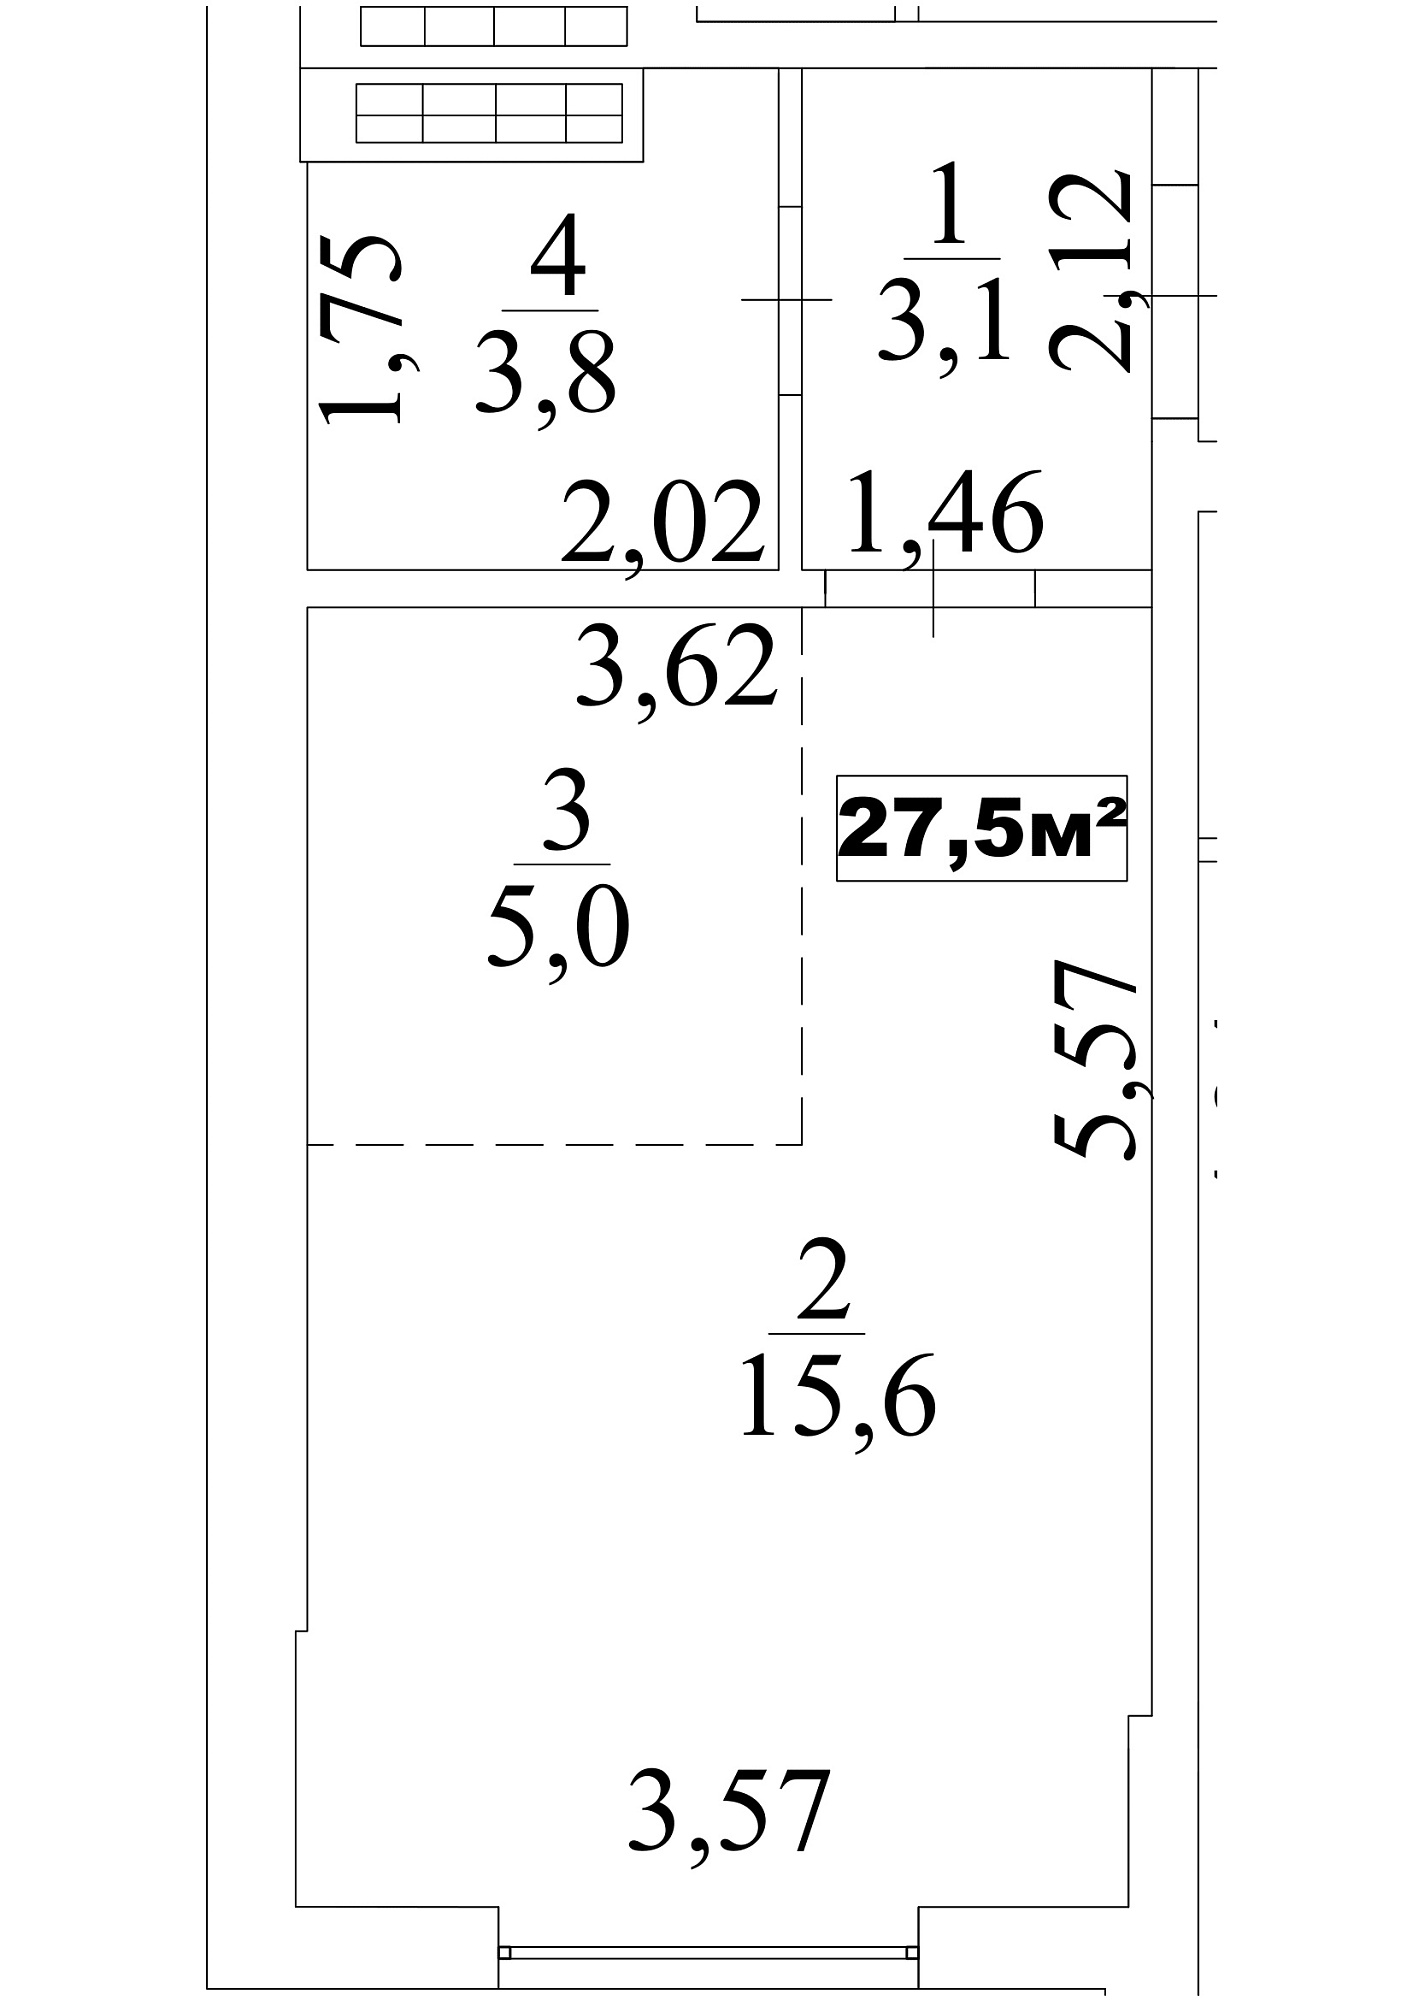 Planning Smart flats area 27.5m2, AB-10-03/0021а.